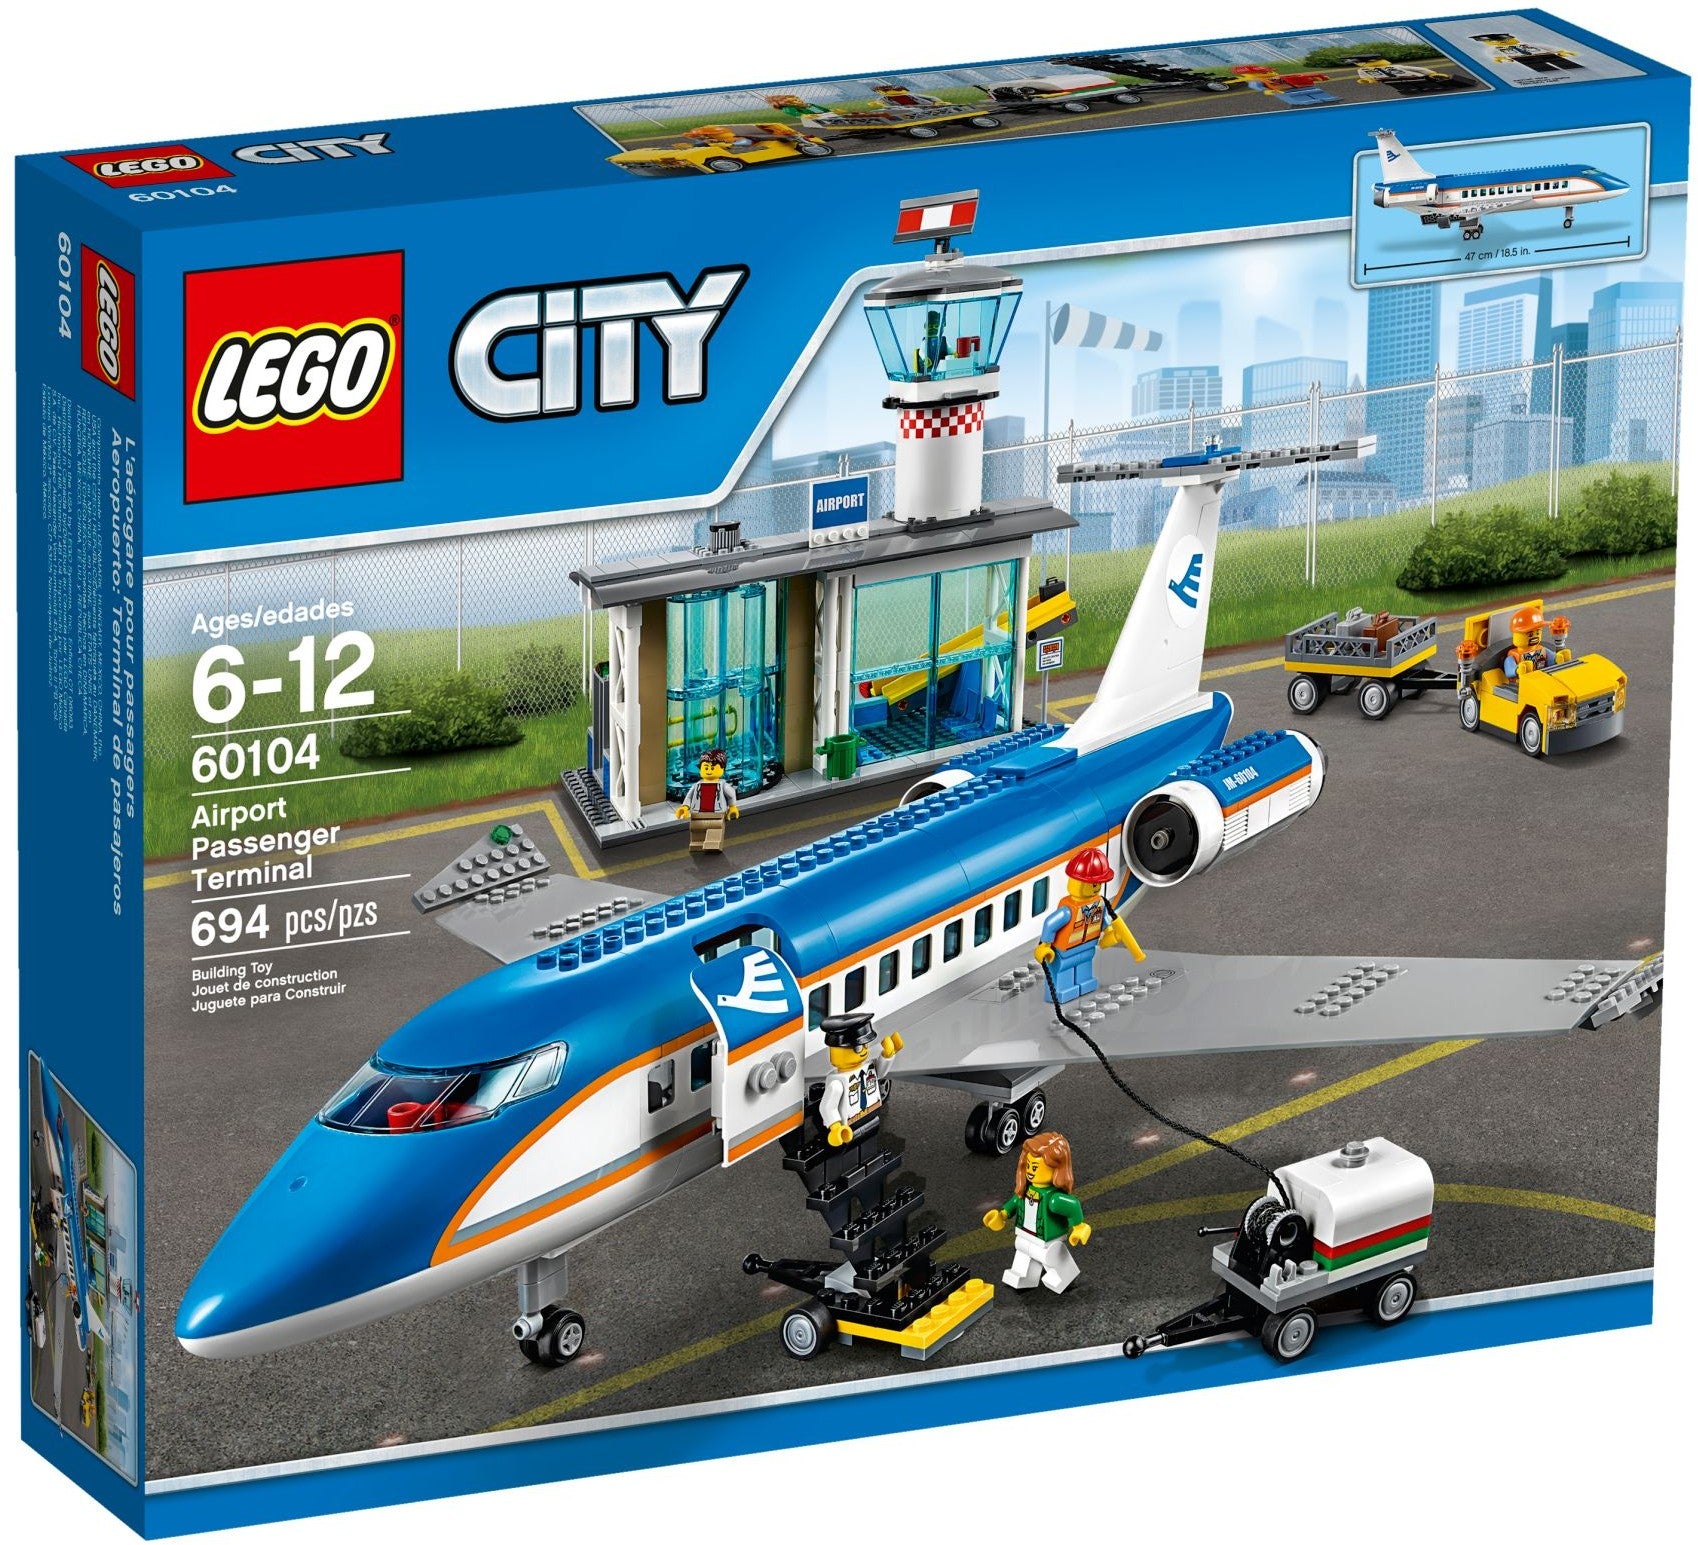 Lego City 60104 - Airport Passenger Terminal